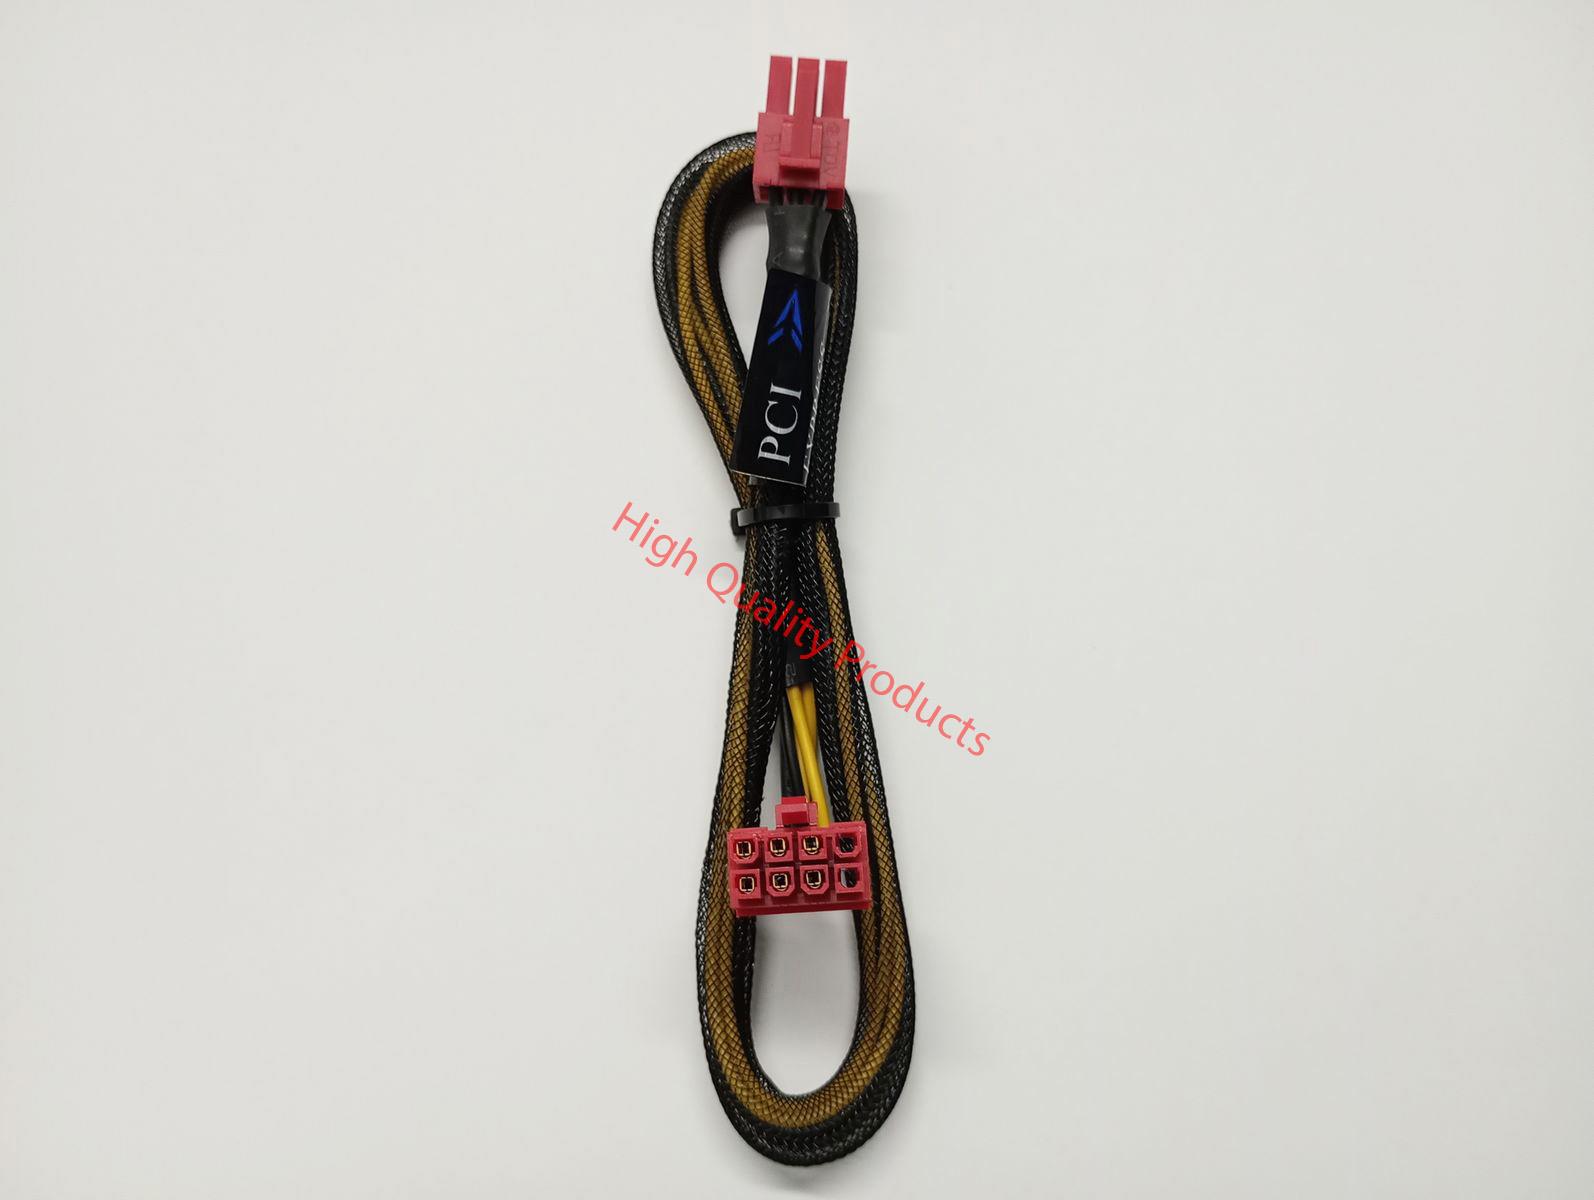 -----Cable Modular for Power Supply OCZ MODXSTREAM-PRO Serie Foto 7201167-c1.jpg